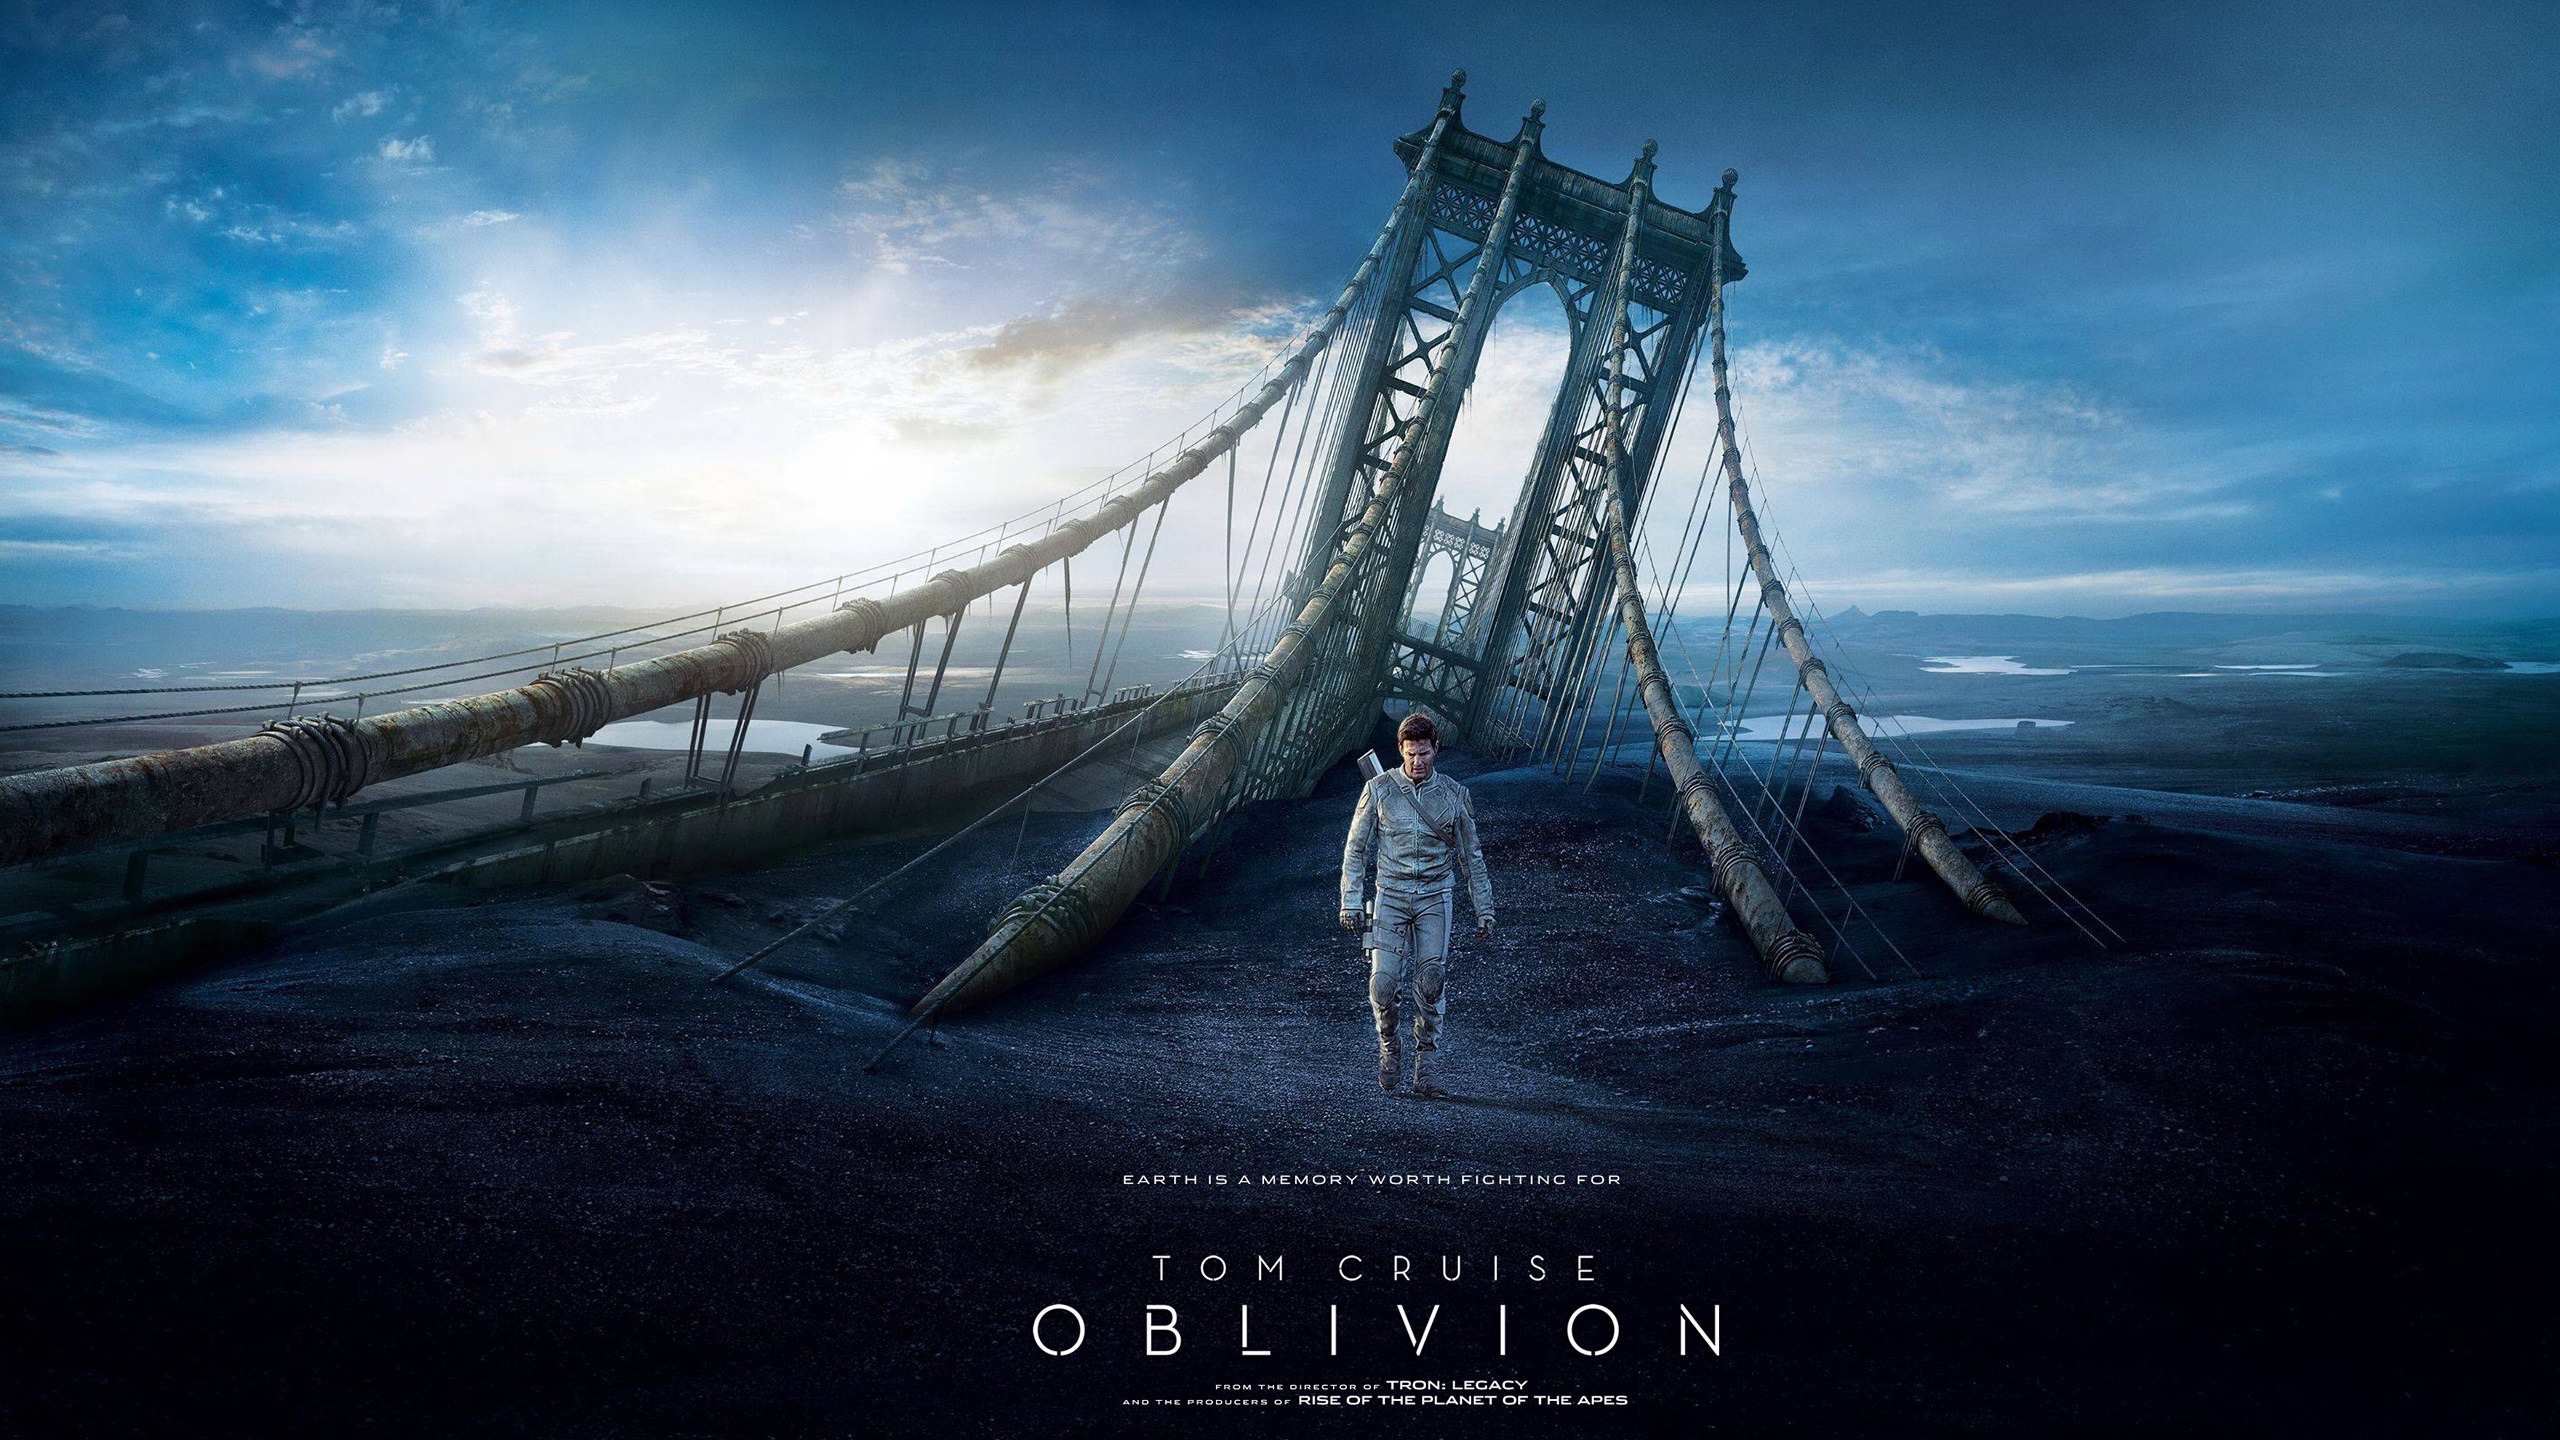 Oblivion Tom Cruise for 2560x1440 HDTV resolution